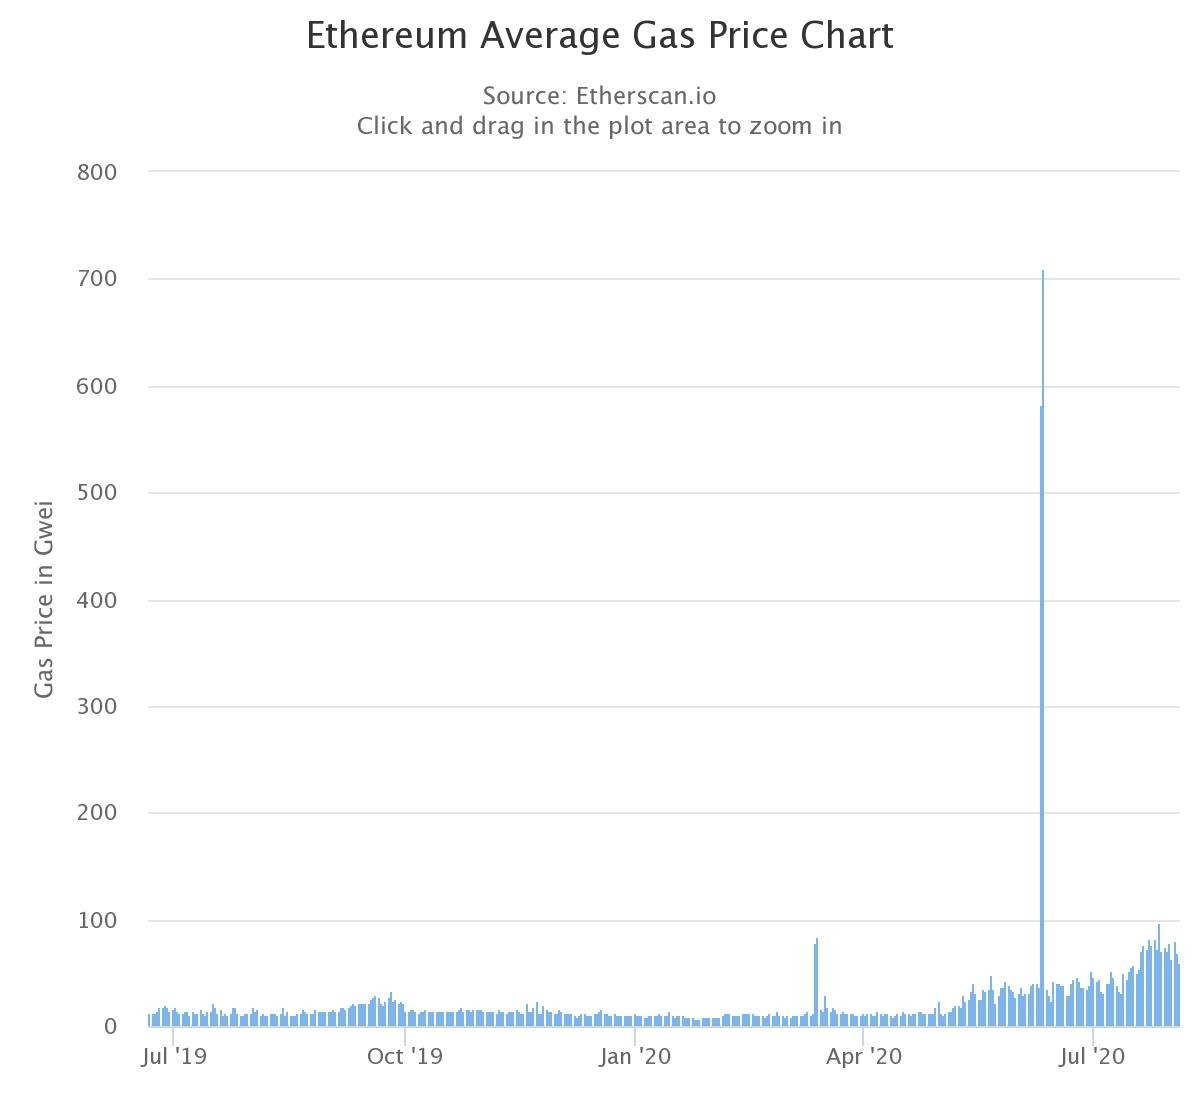 Carta harga gas purata Ethereum. Sumber: Etherscan